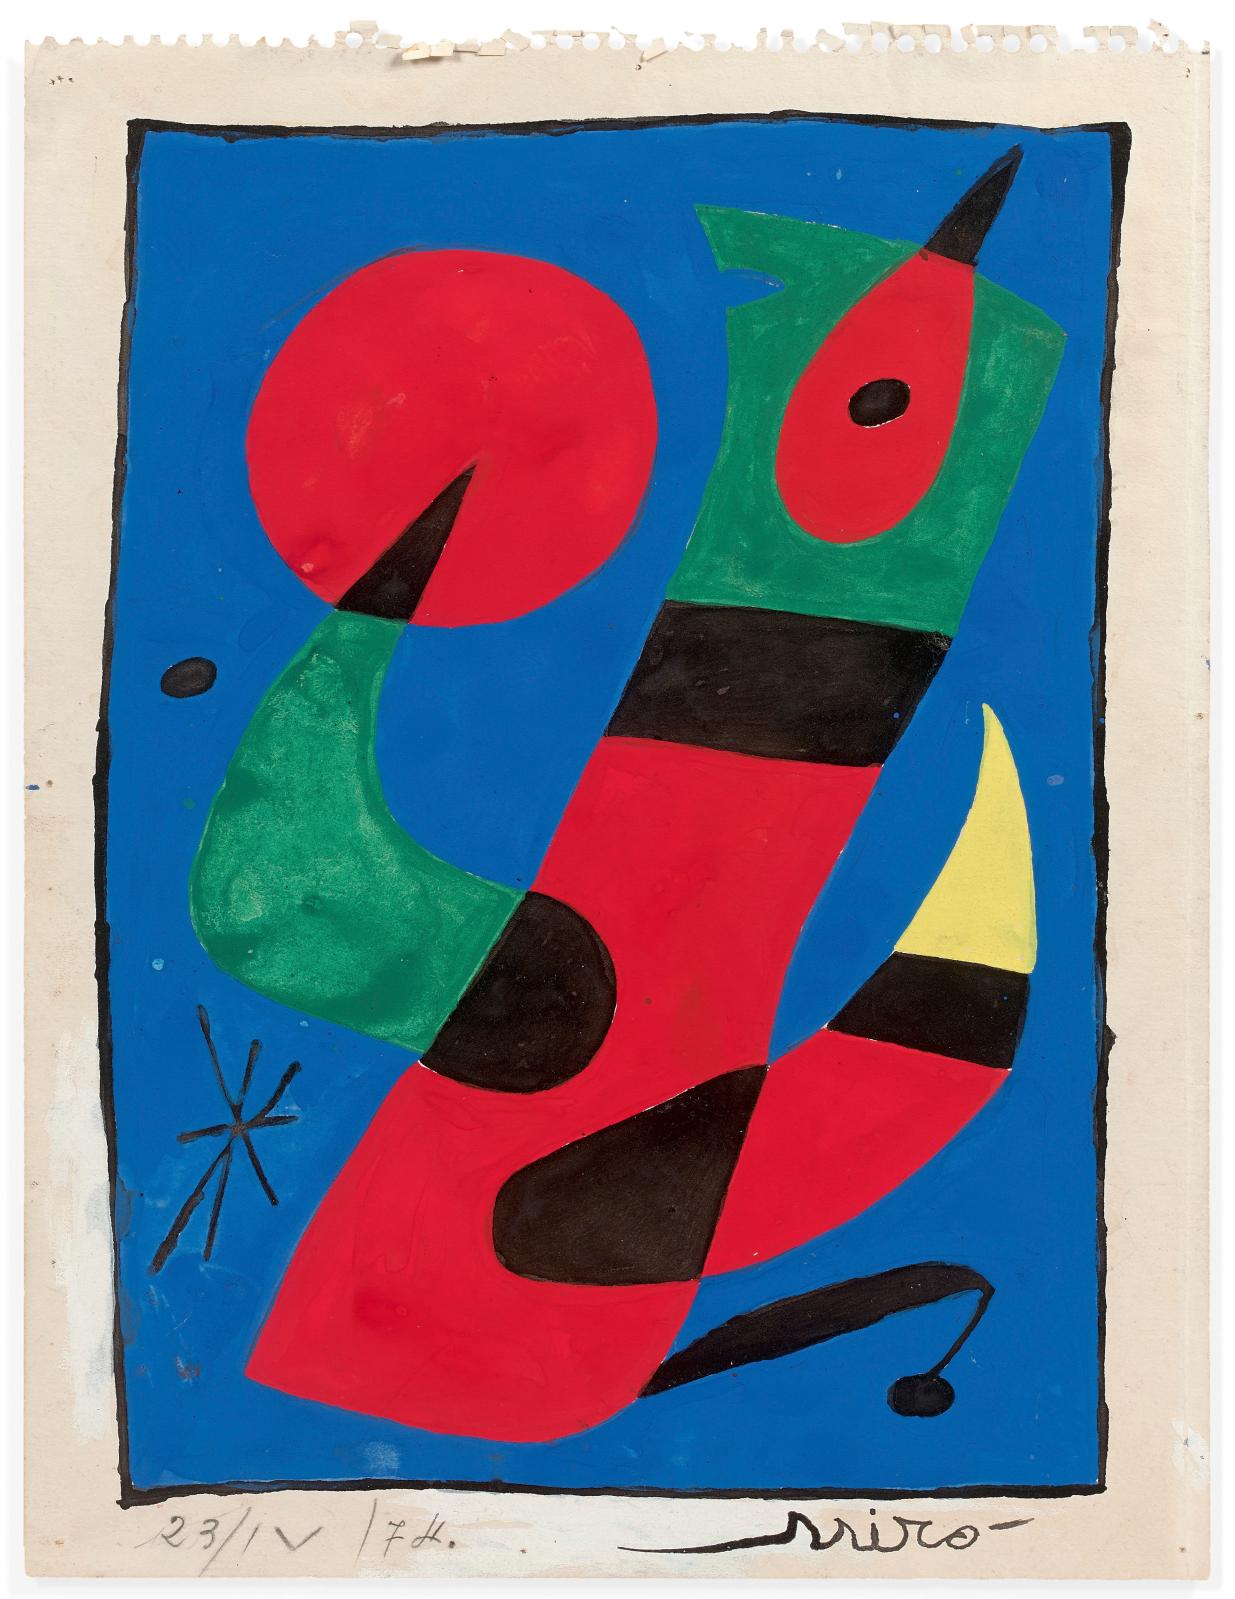 L’heure de gloire de l’art postal de Joan Miró